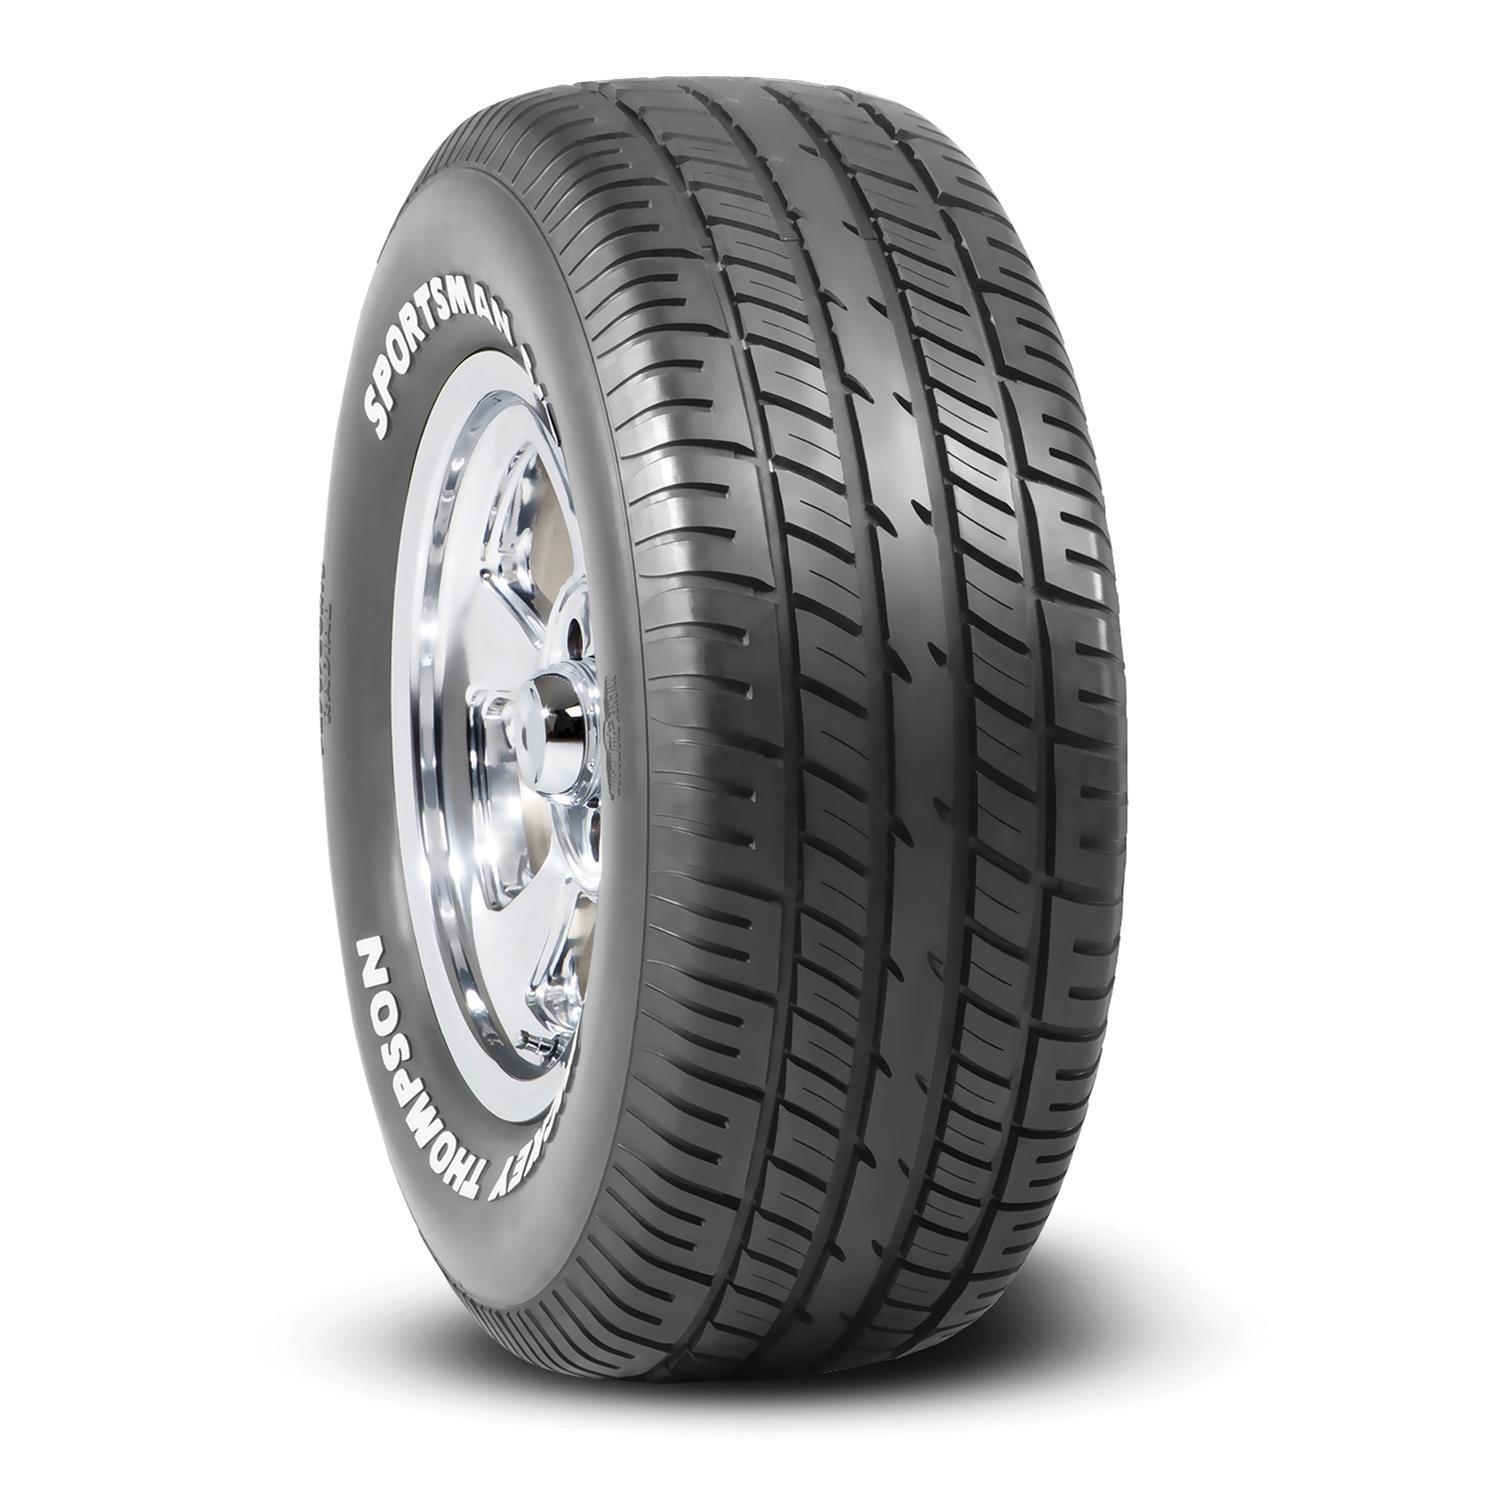 P215/70R15 Sportsman S/T Tire - Burlile Performance Products